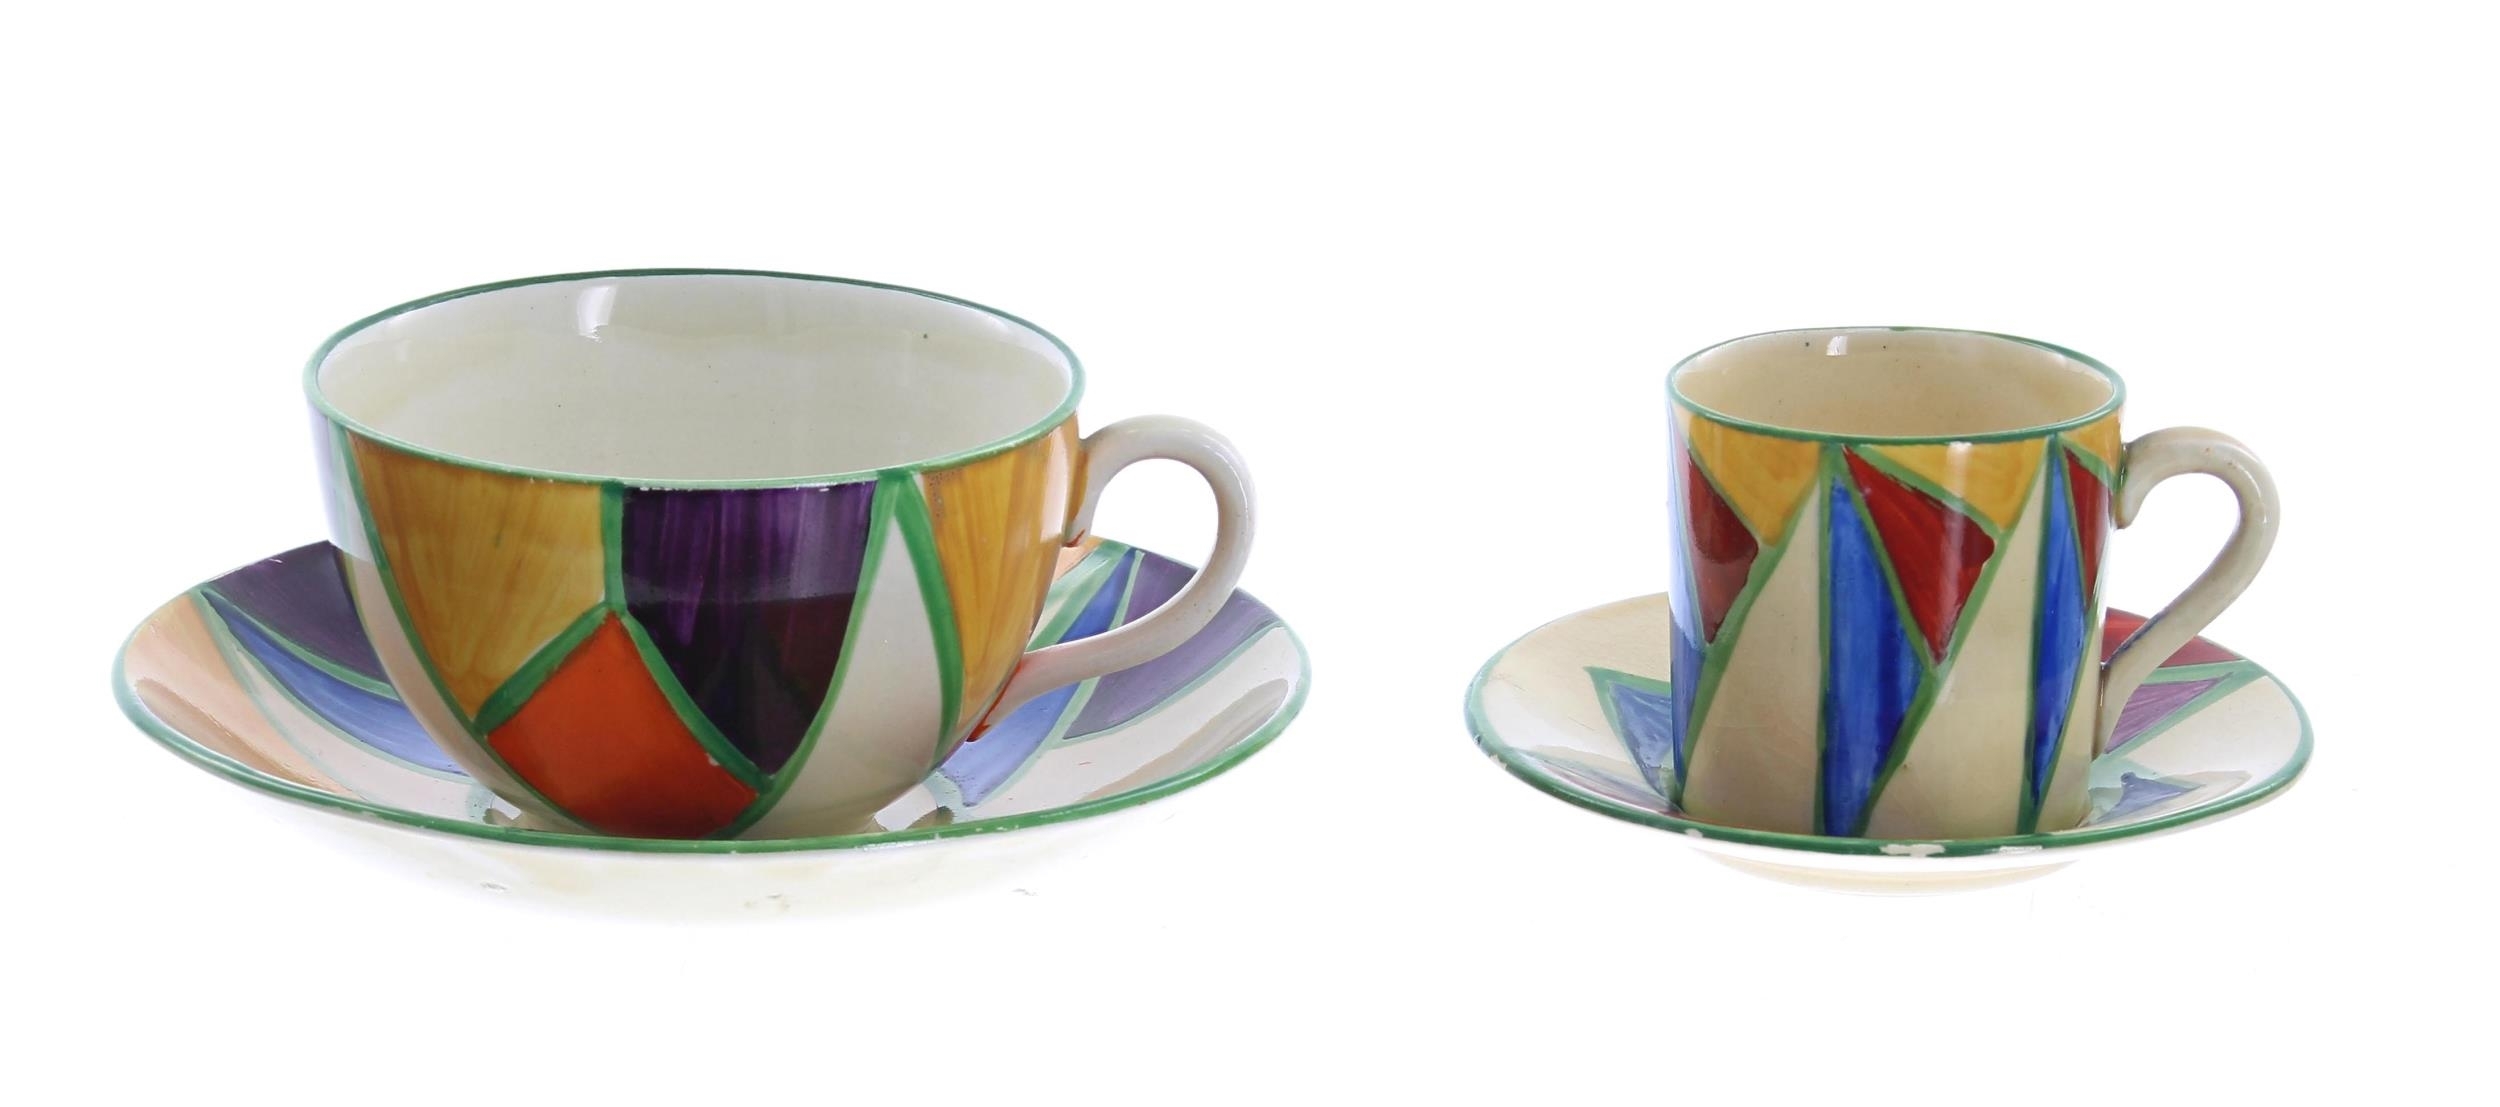 'Original Bizarre' globe tea cup and saucer